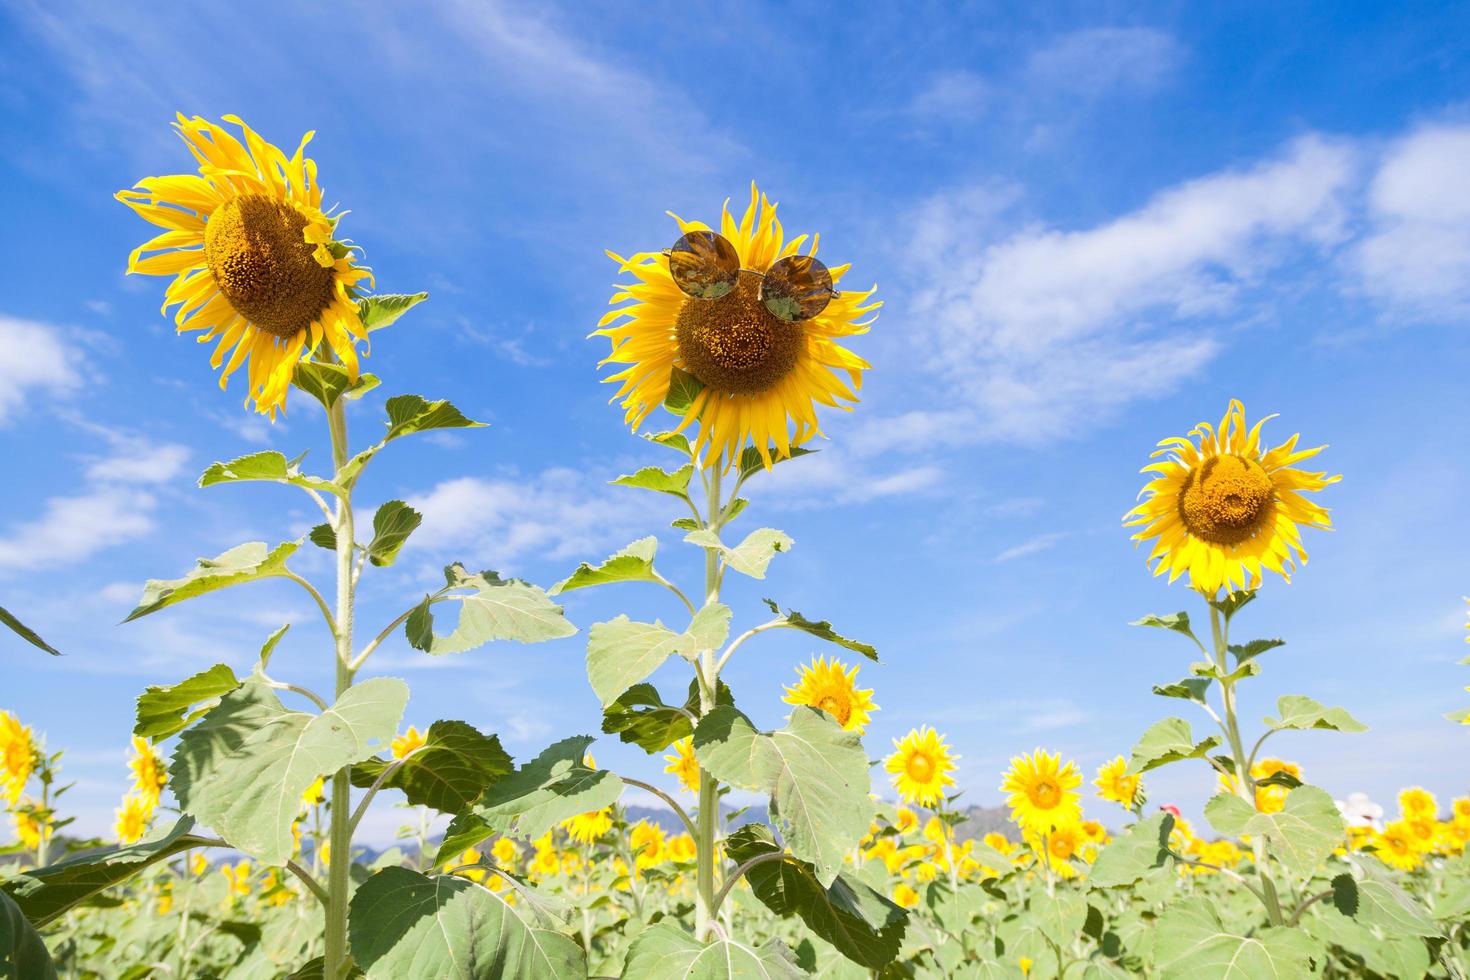 Sunflower with sunglasses photo